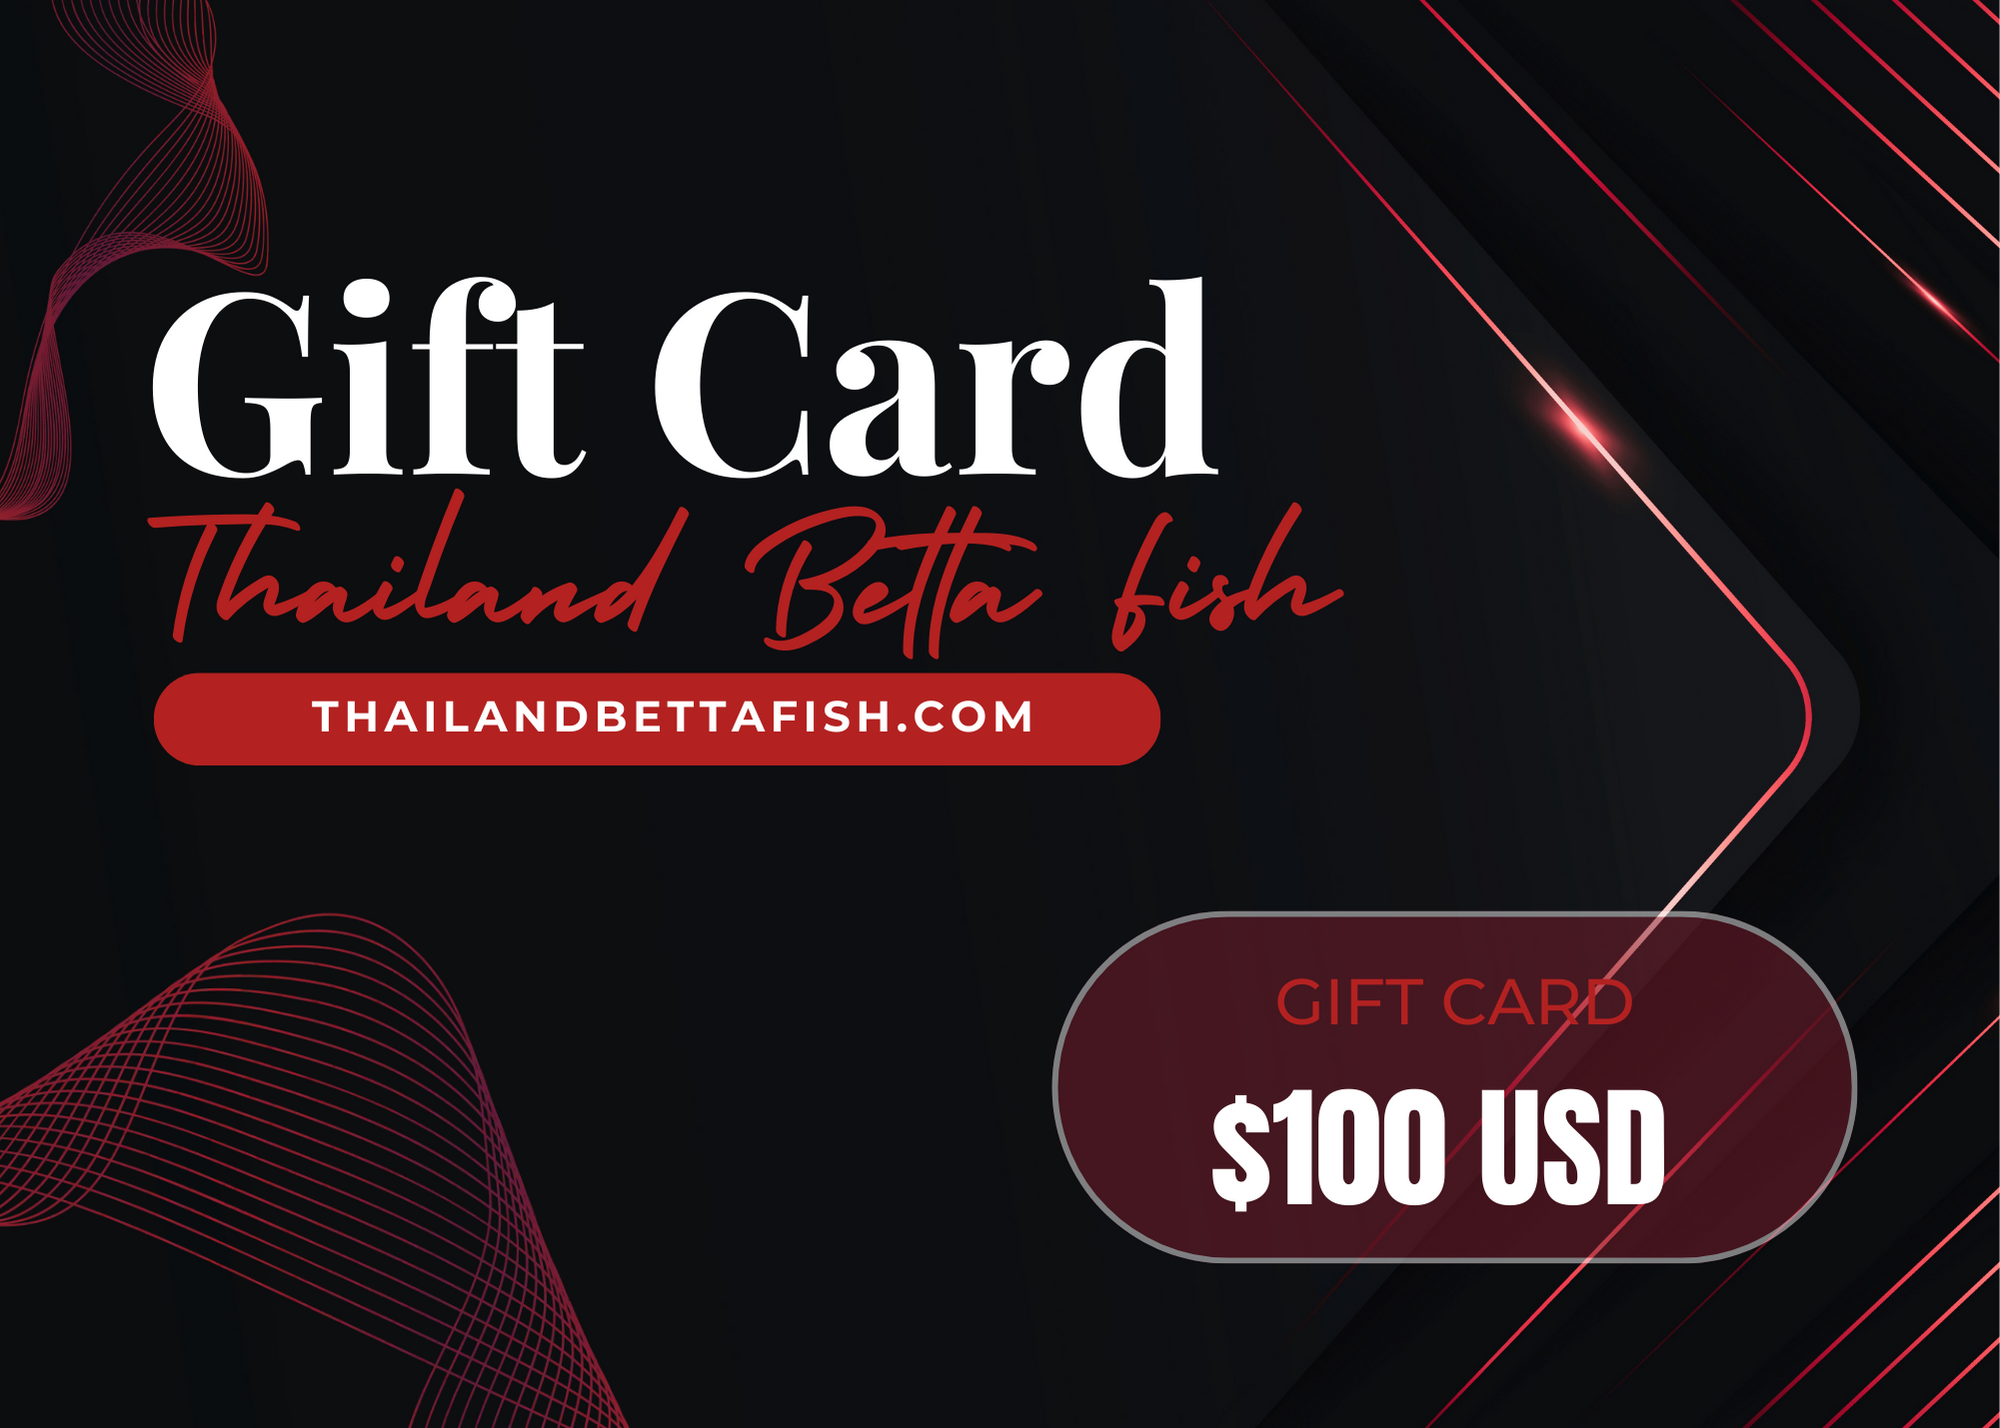 Thailand Betta Fish Gift Card